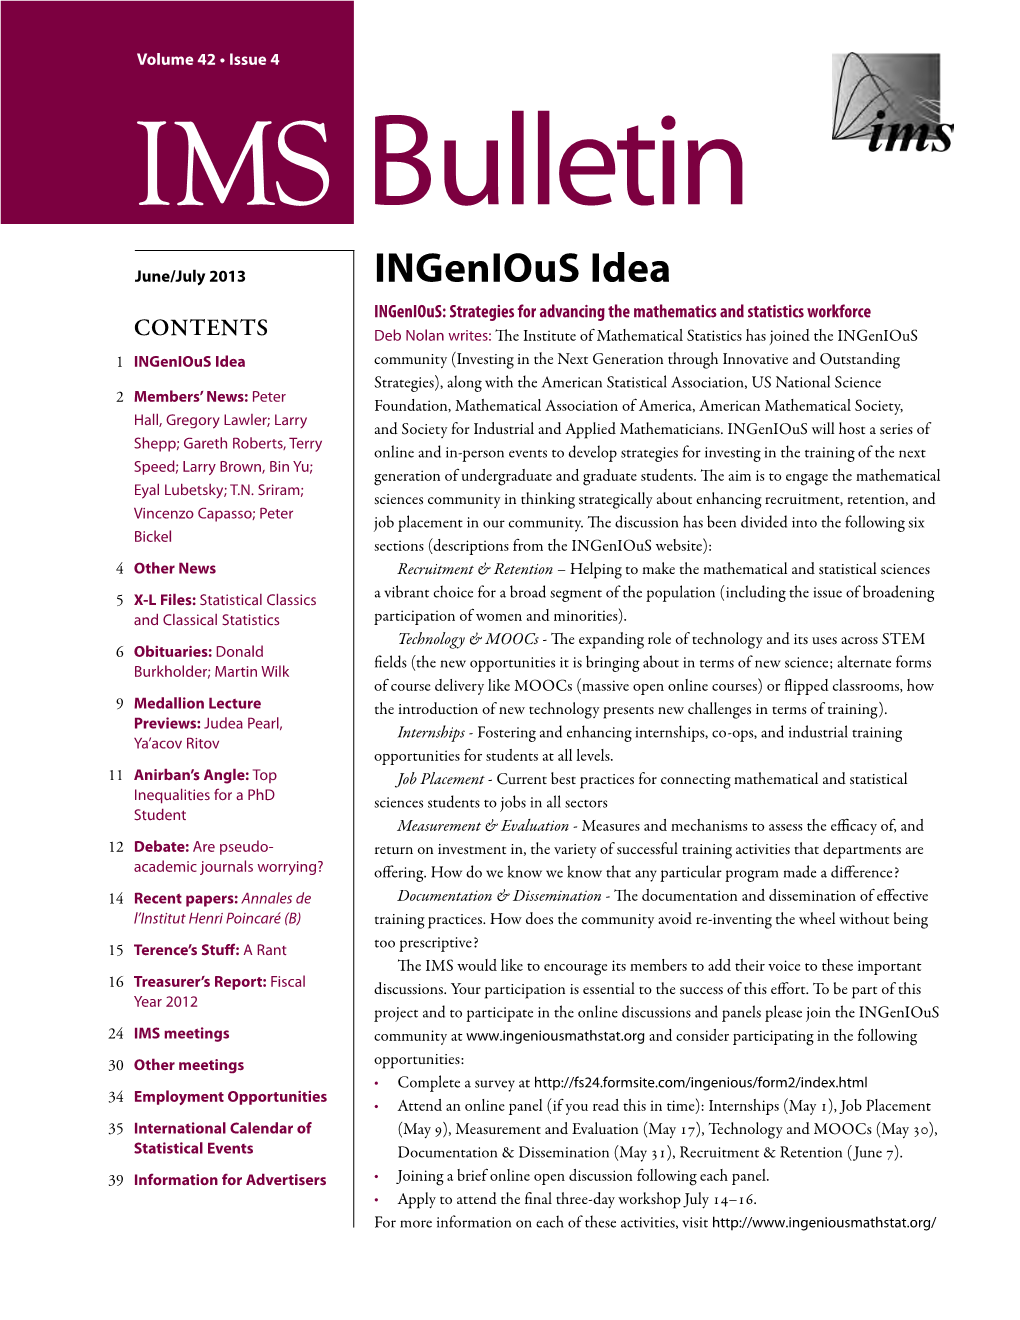 IMS Bulletin 42(4)